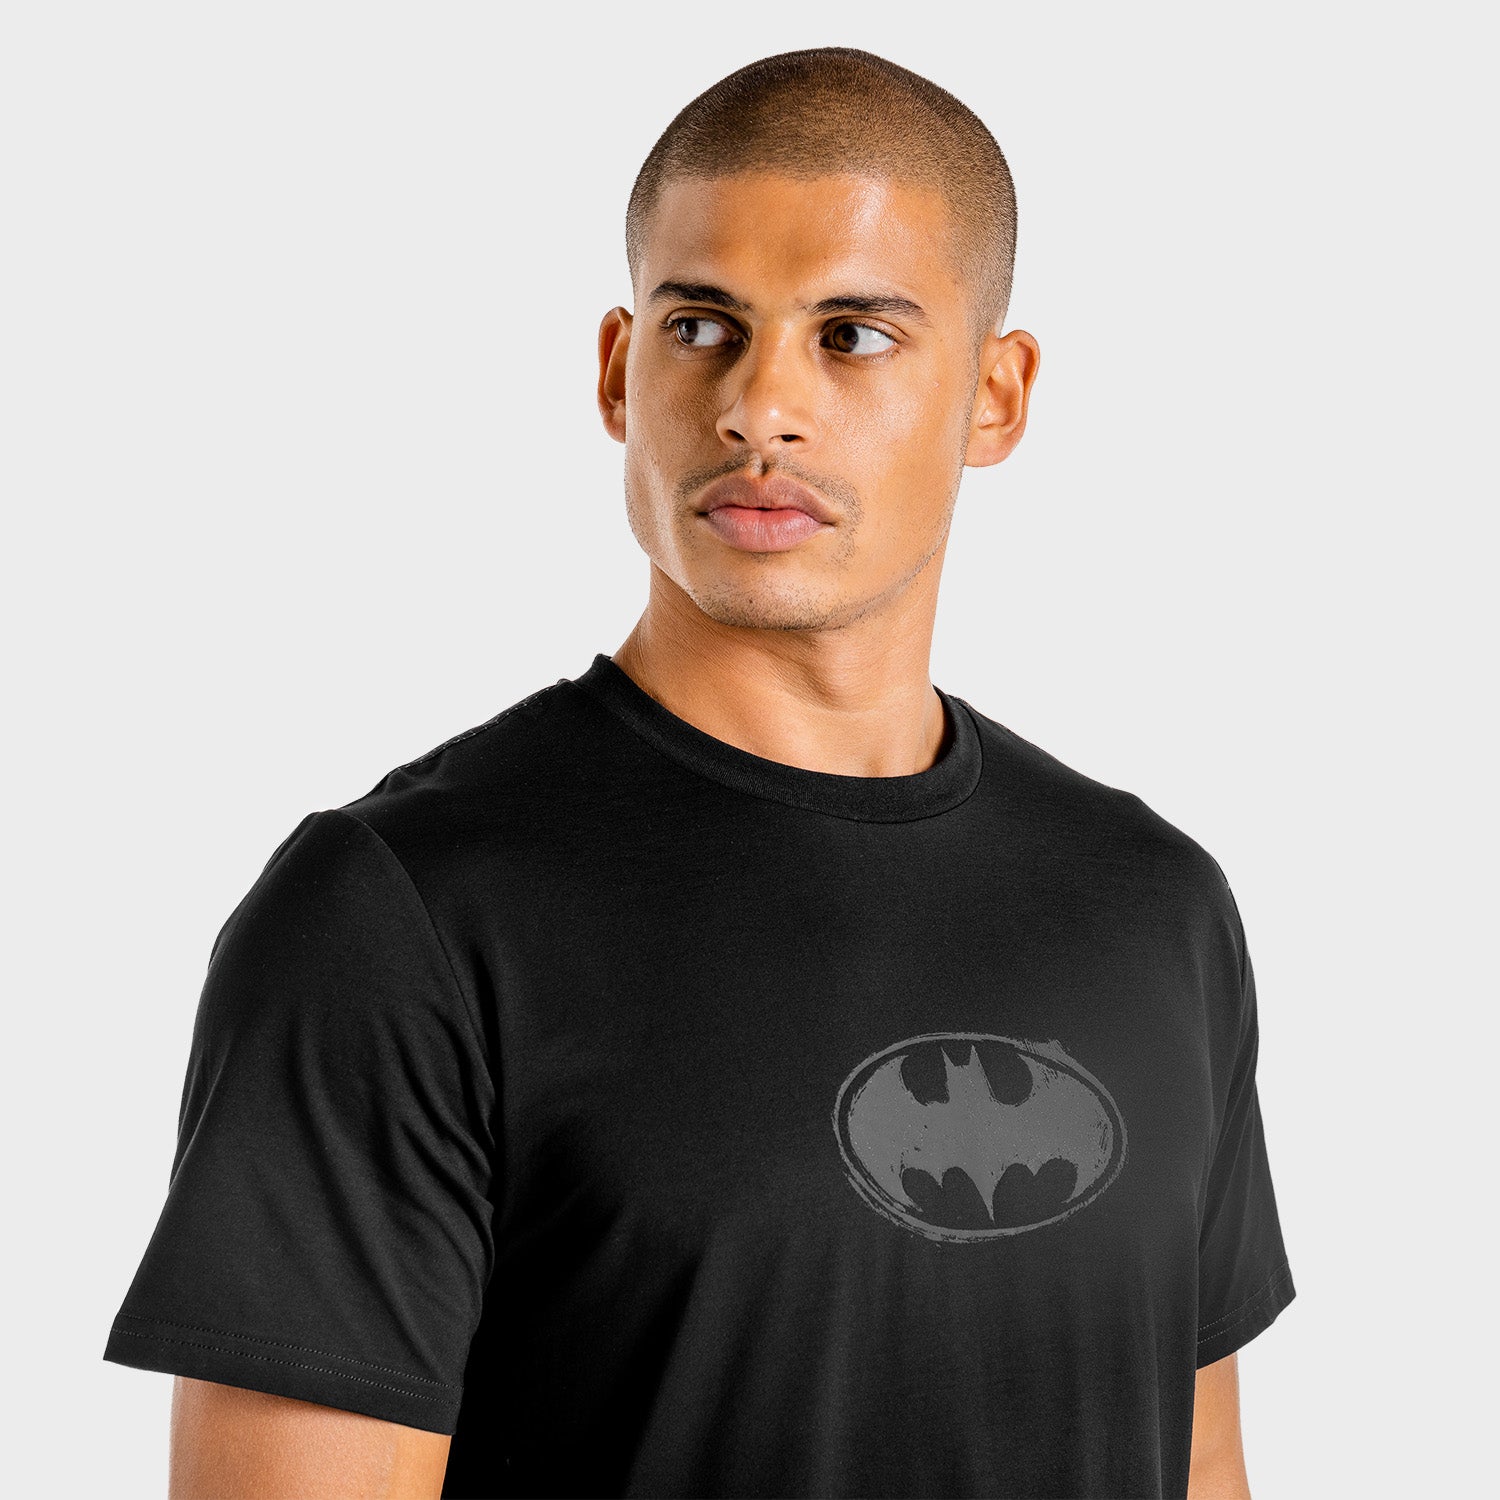 squatwolf-workout-shirts-for-men-batman-gym-tee-black-gym-wear